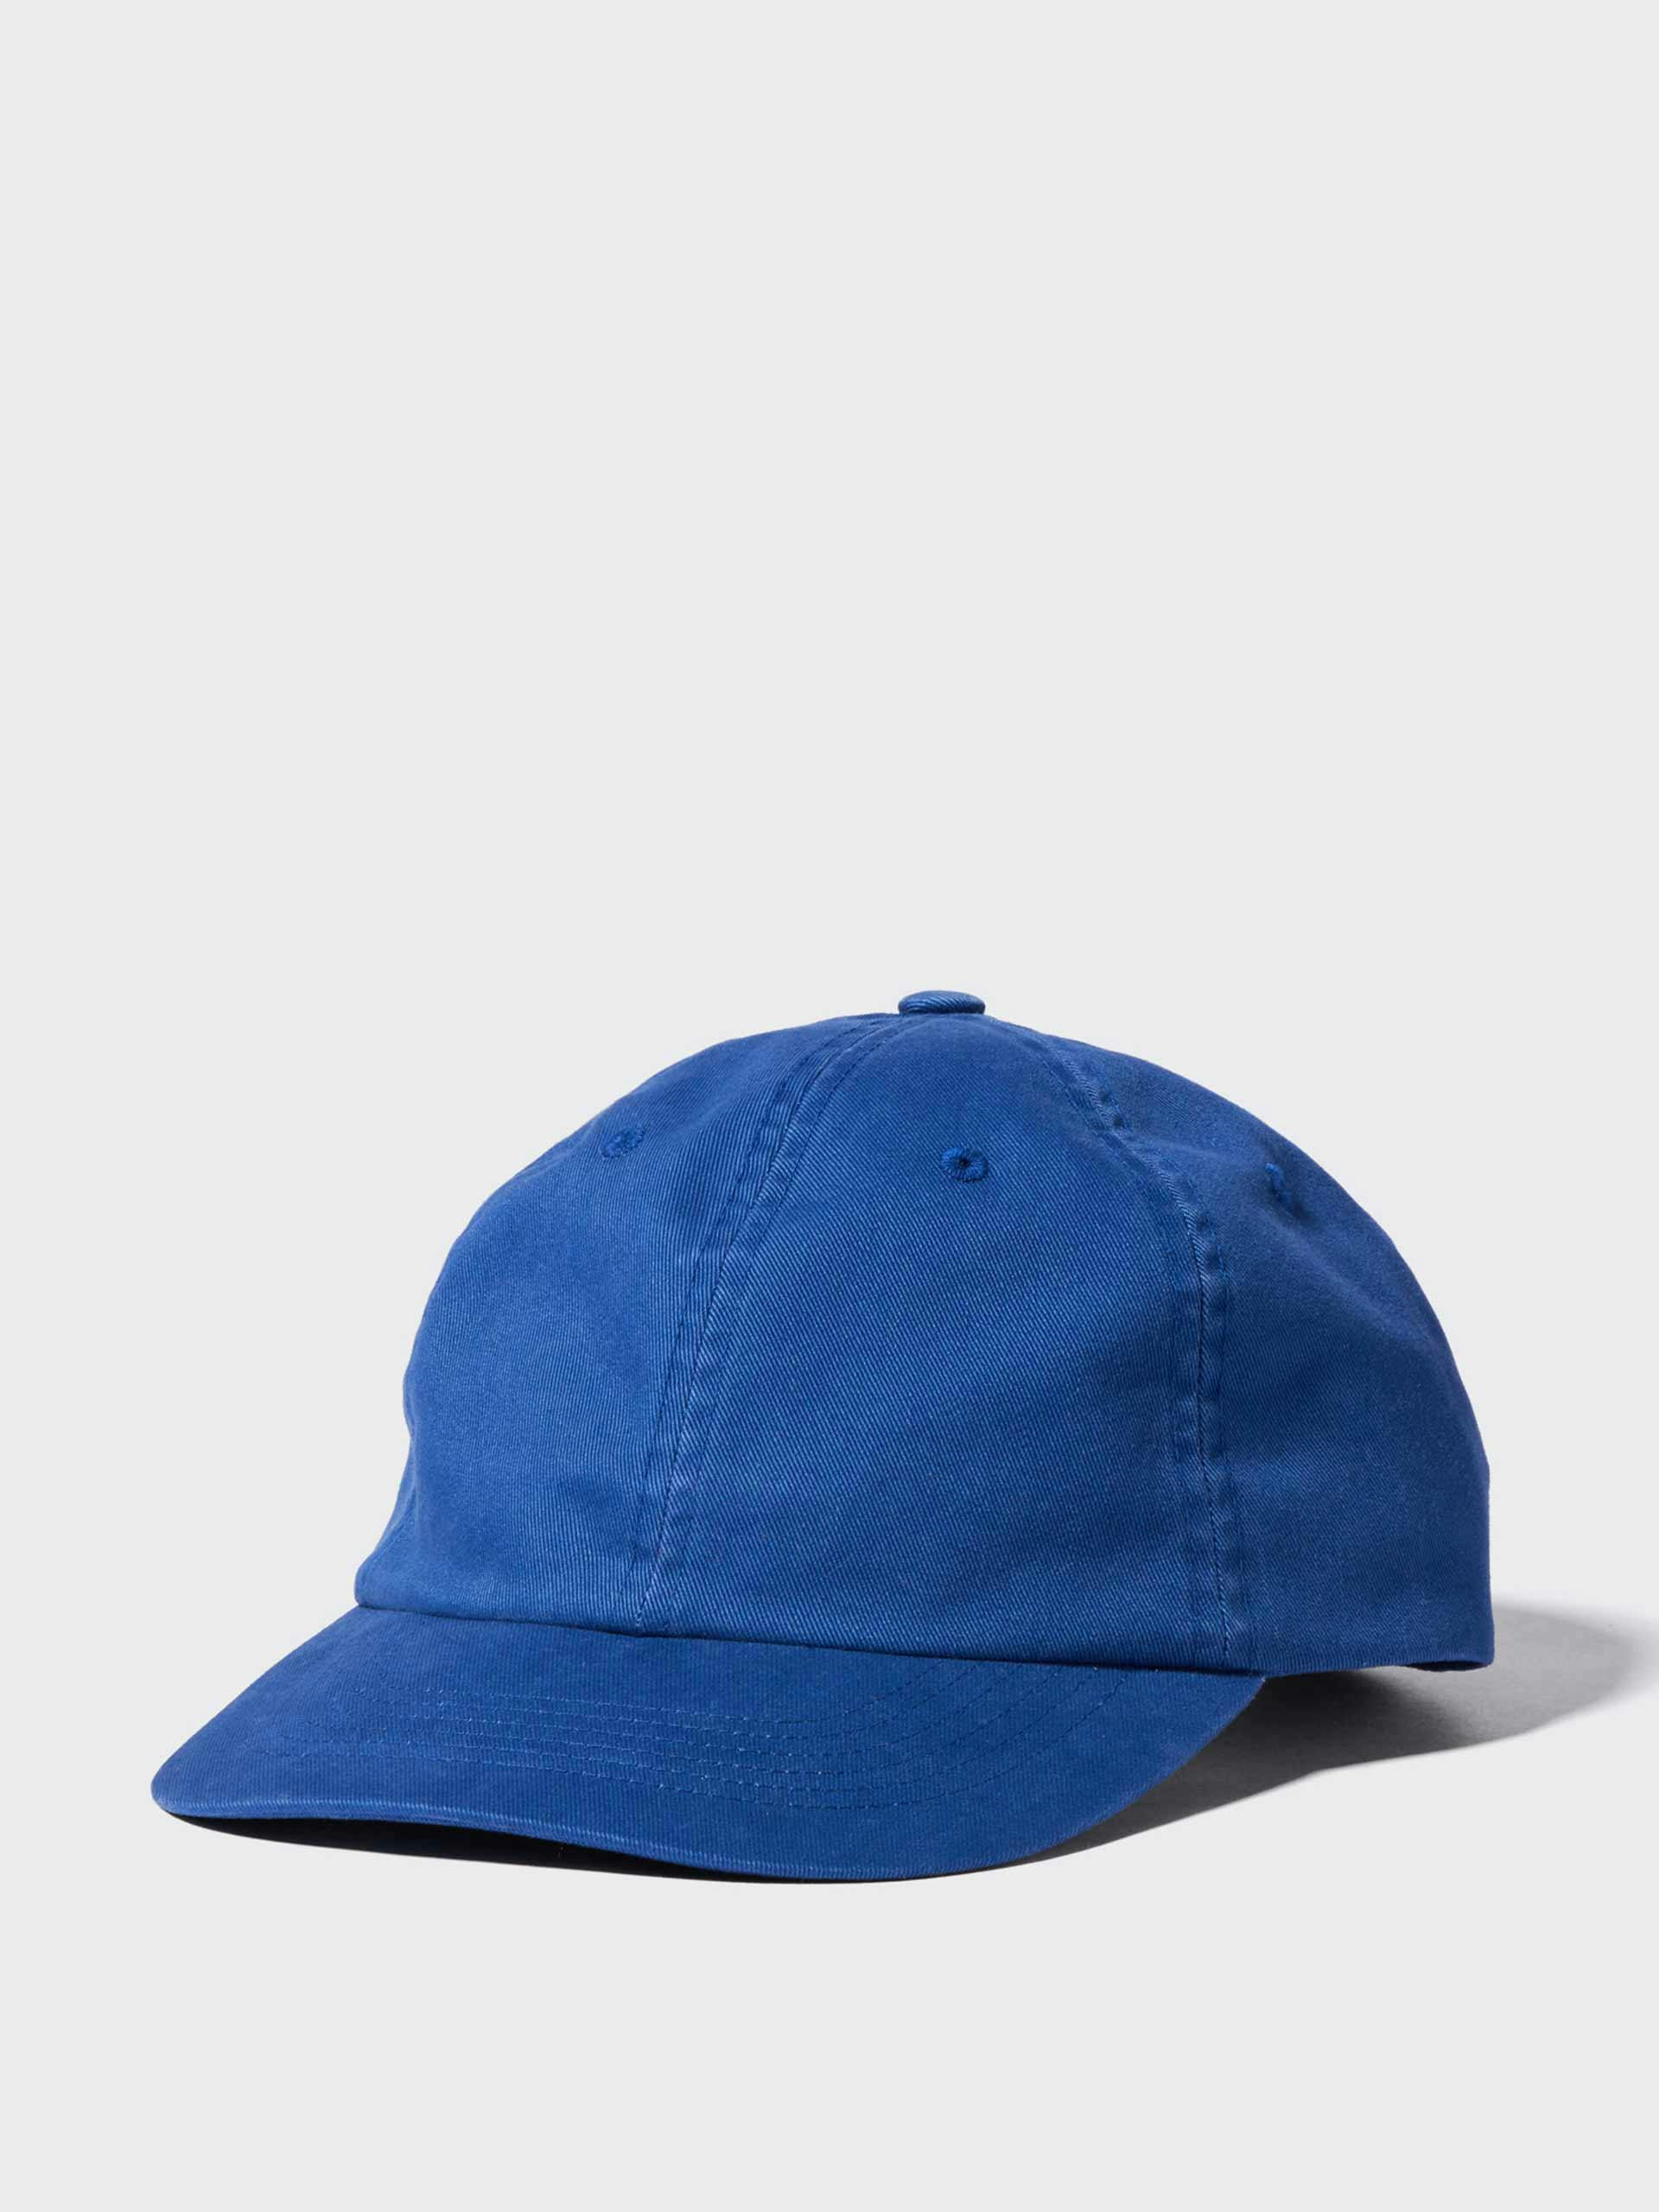 Blue washed twill cap